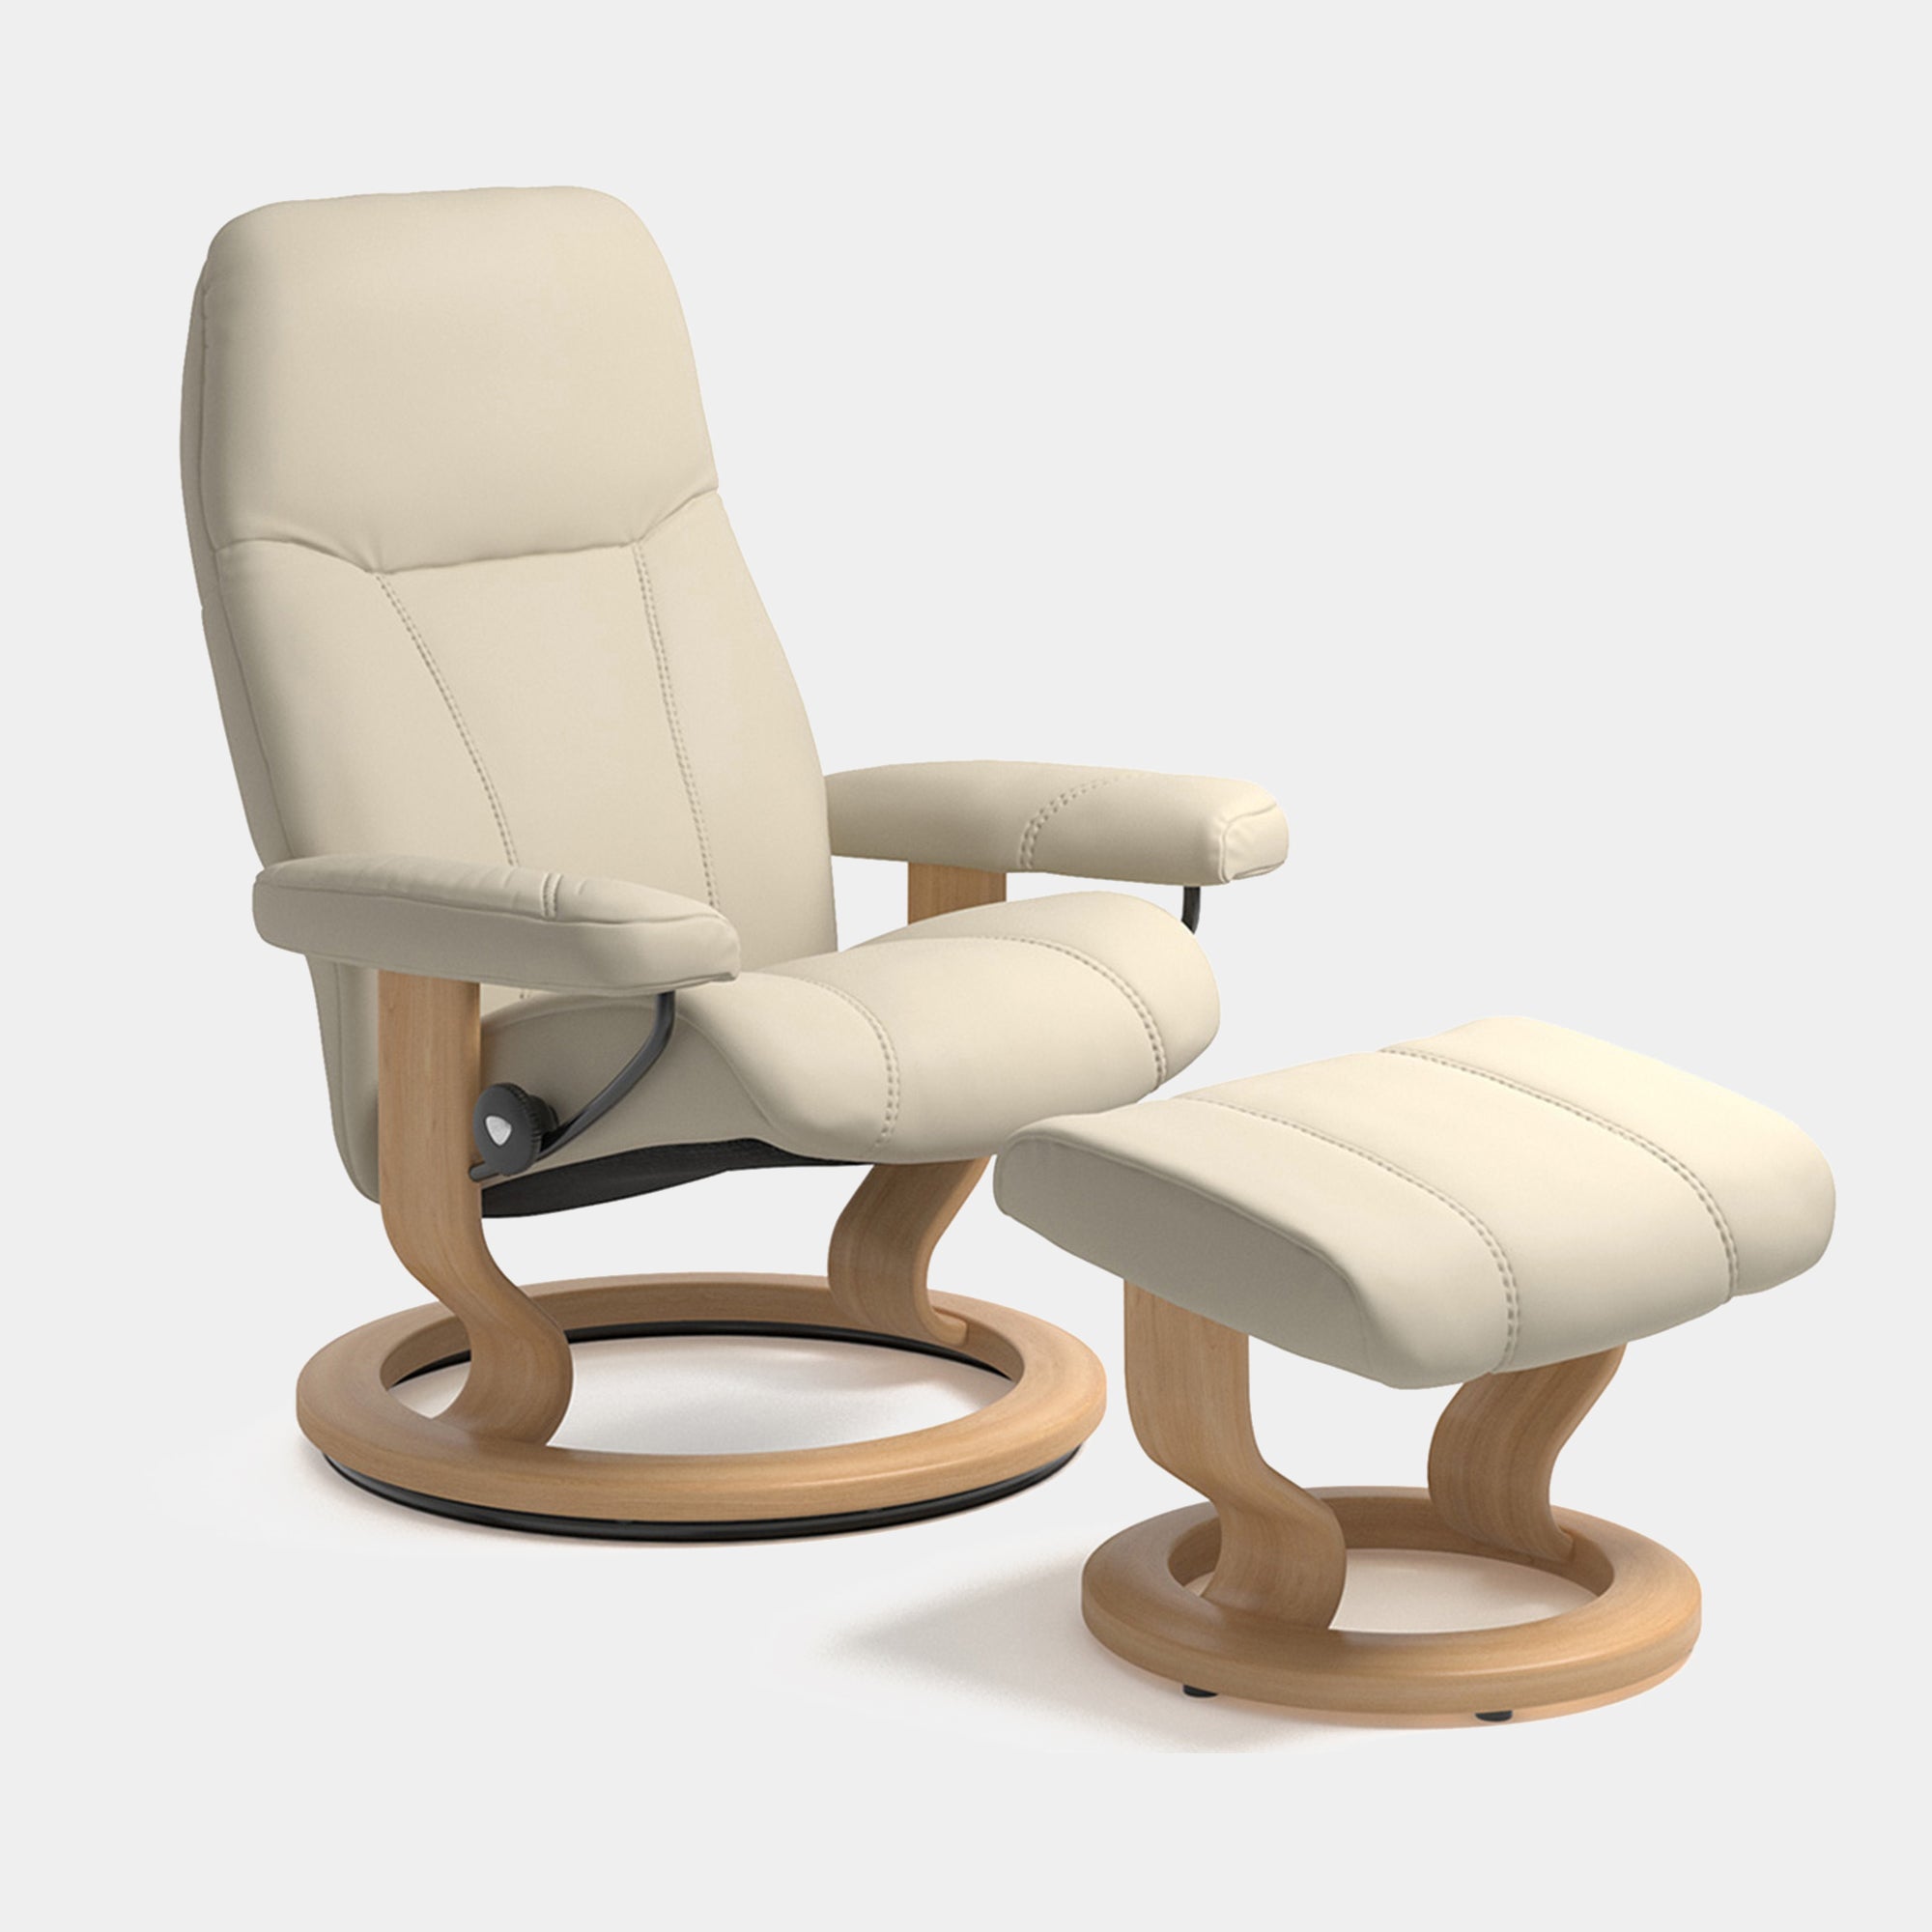 Chair & Stool Large Batick Cream Leather - Oak Wood Finish